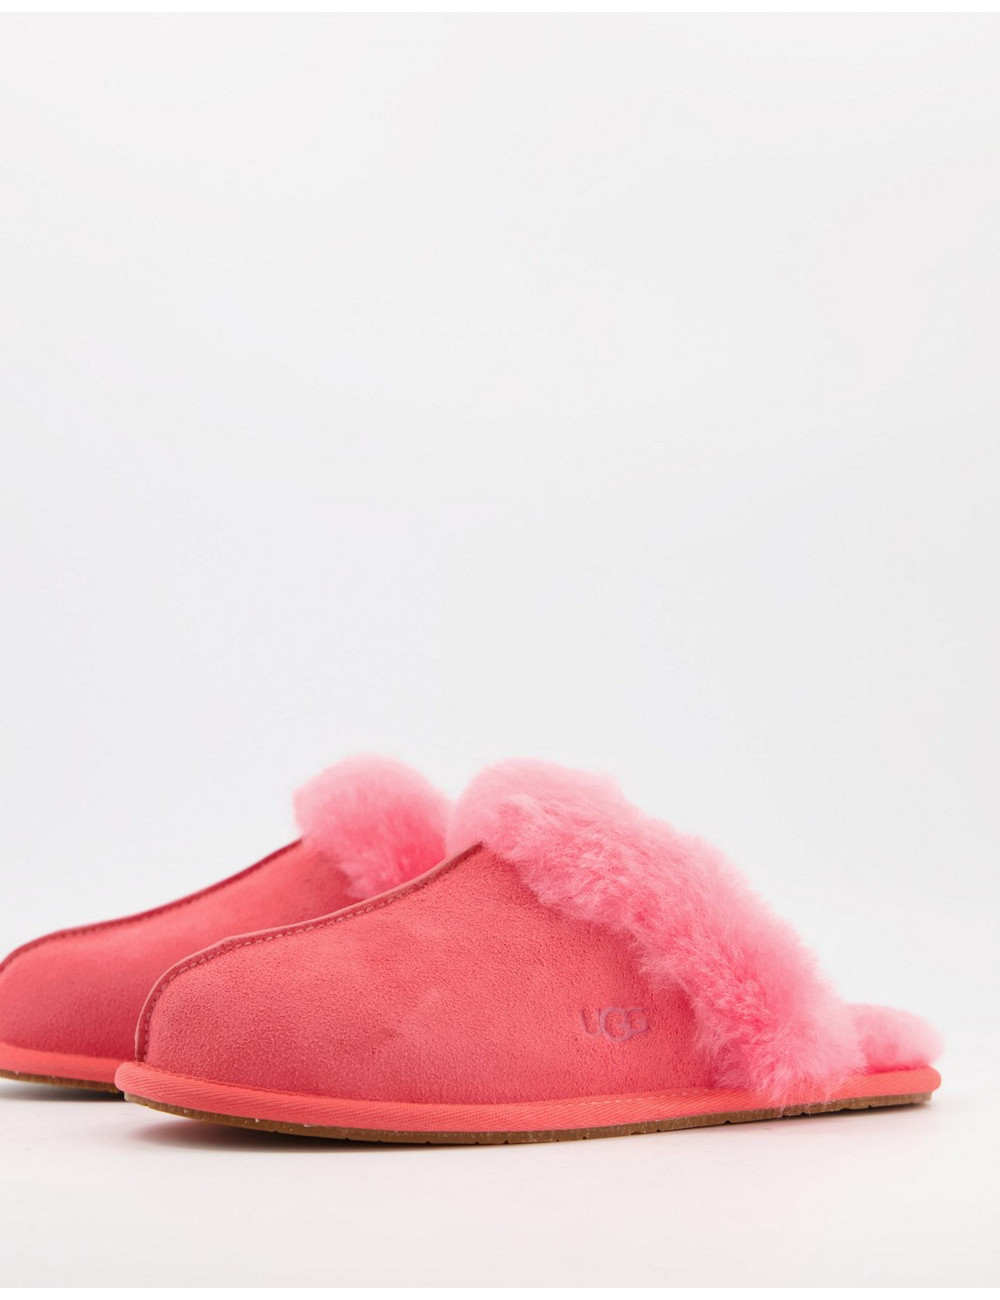 UGG Scuffette II slippers...